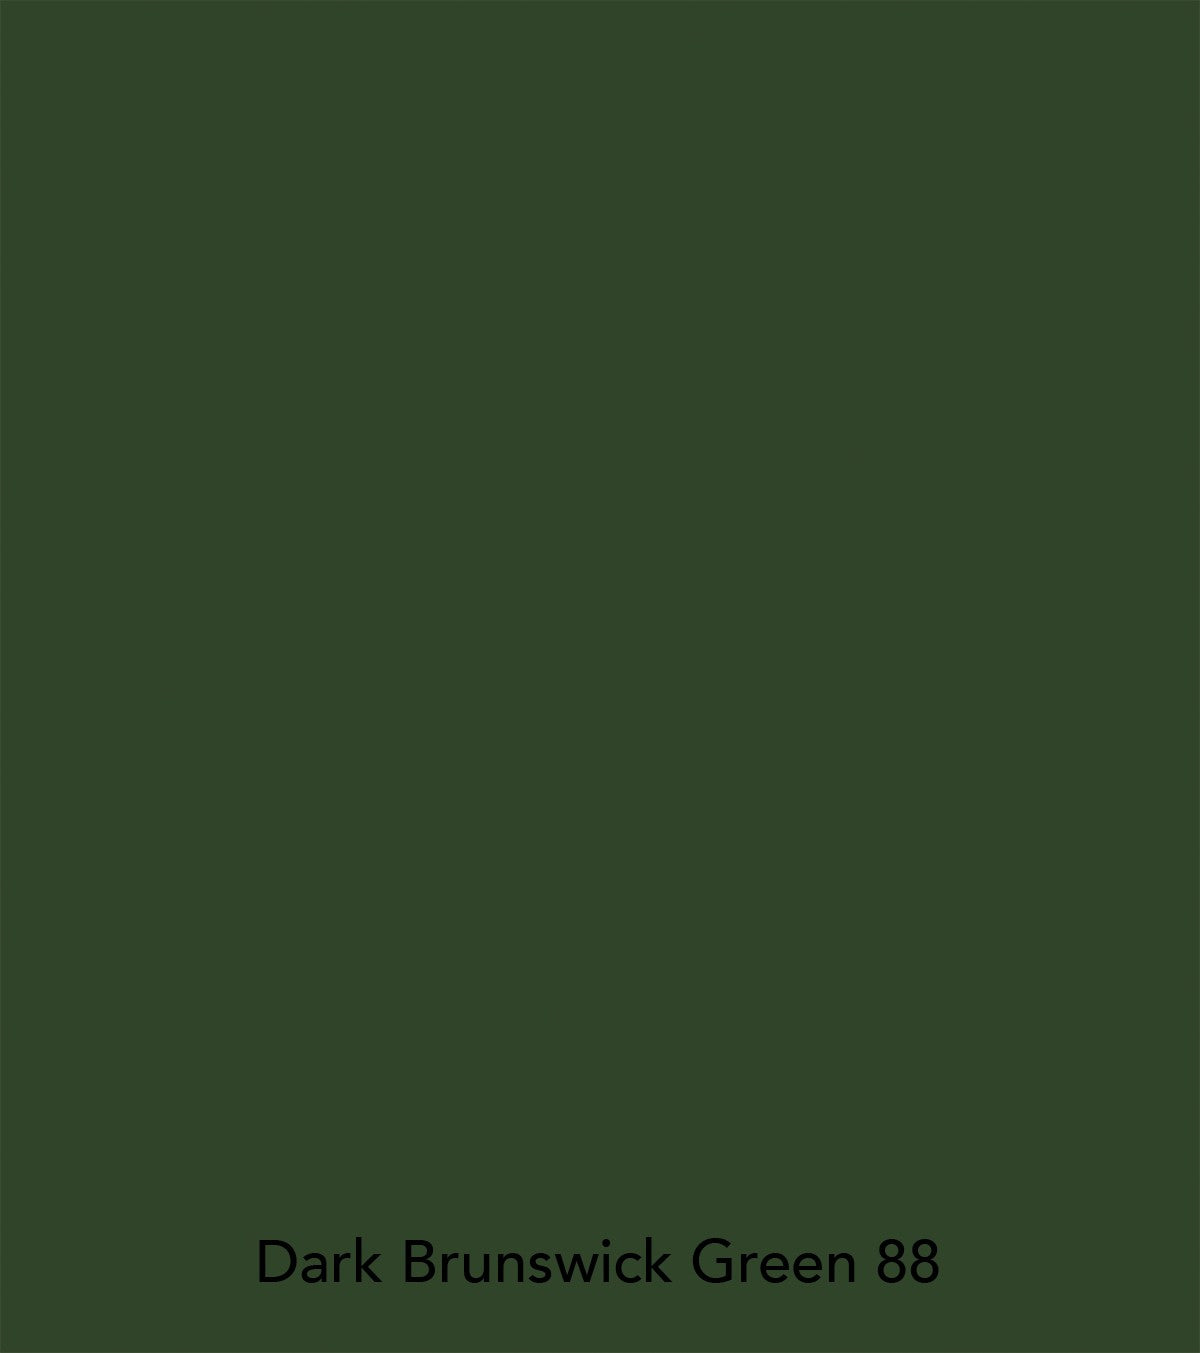 Vernice Little Greene - Verde Brunswick scuro (88)